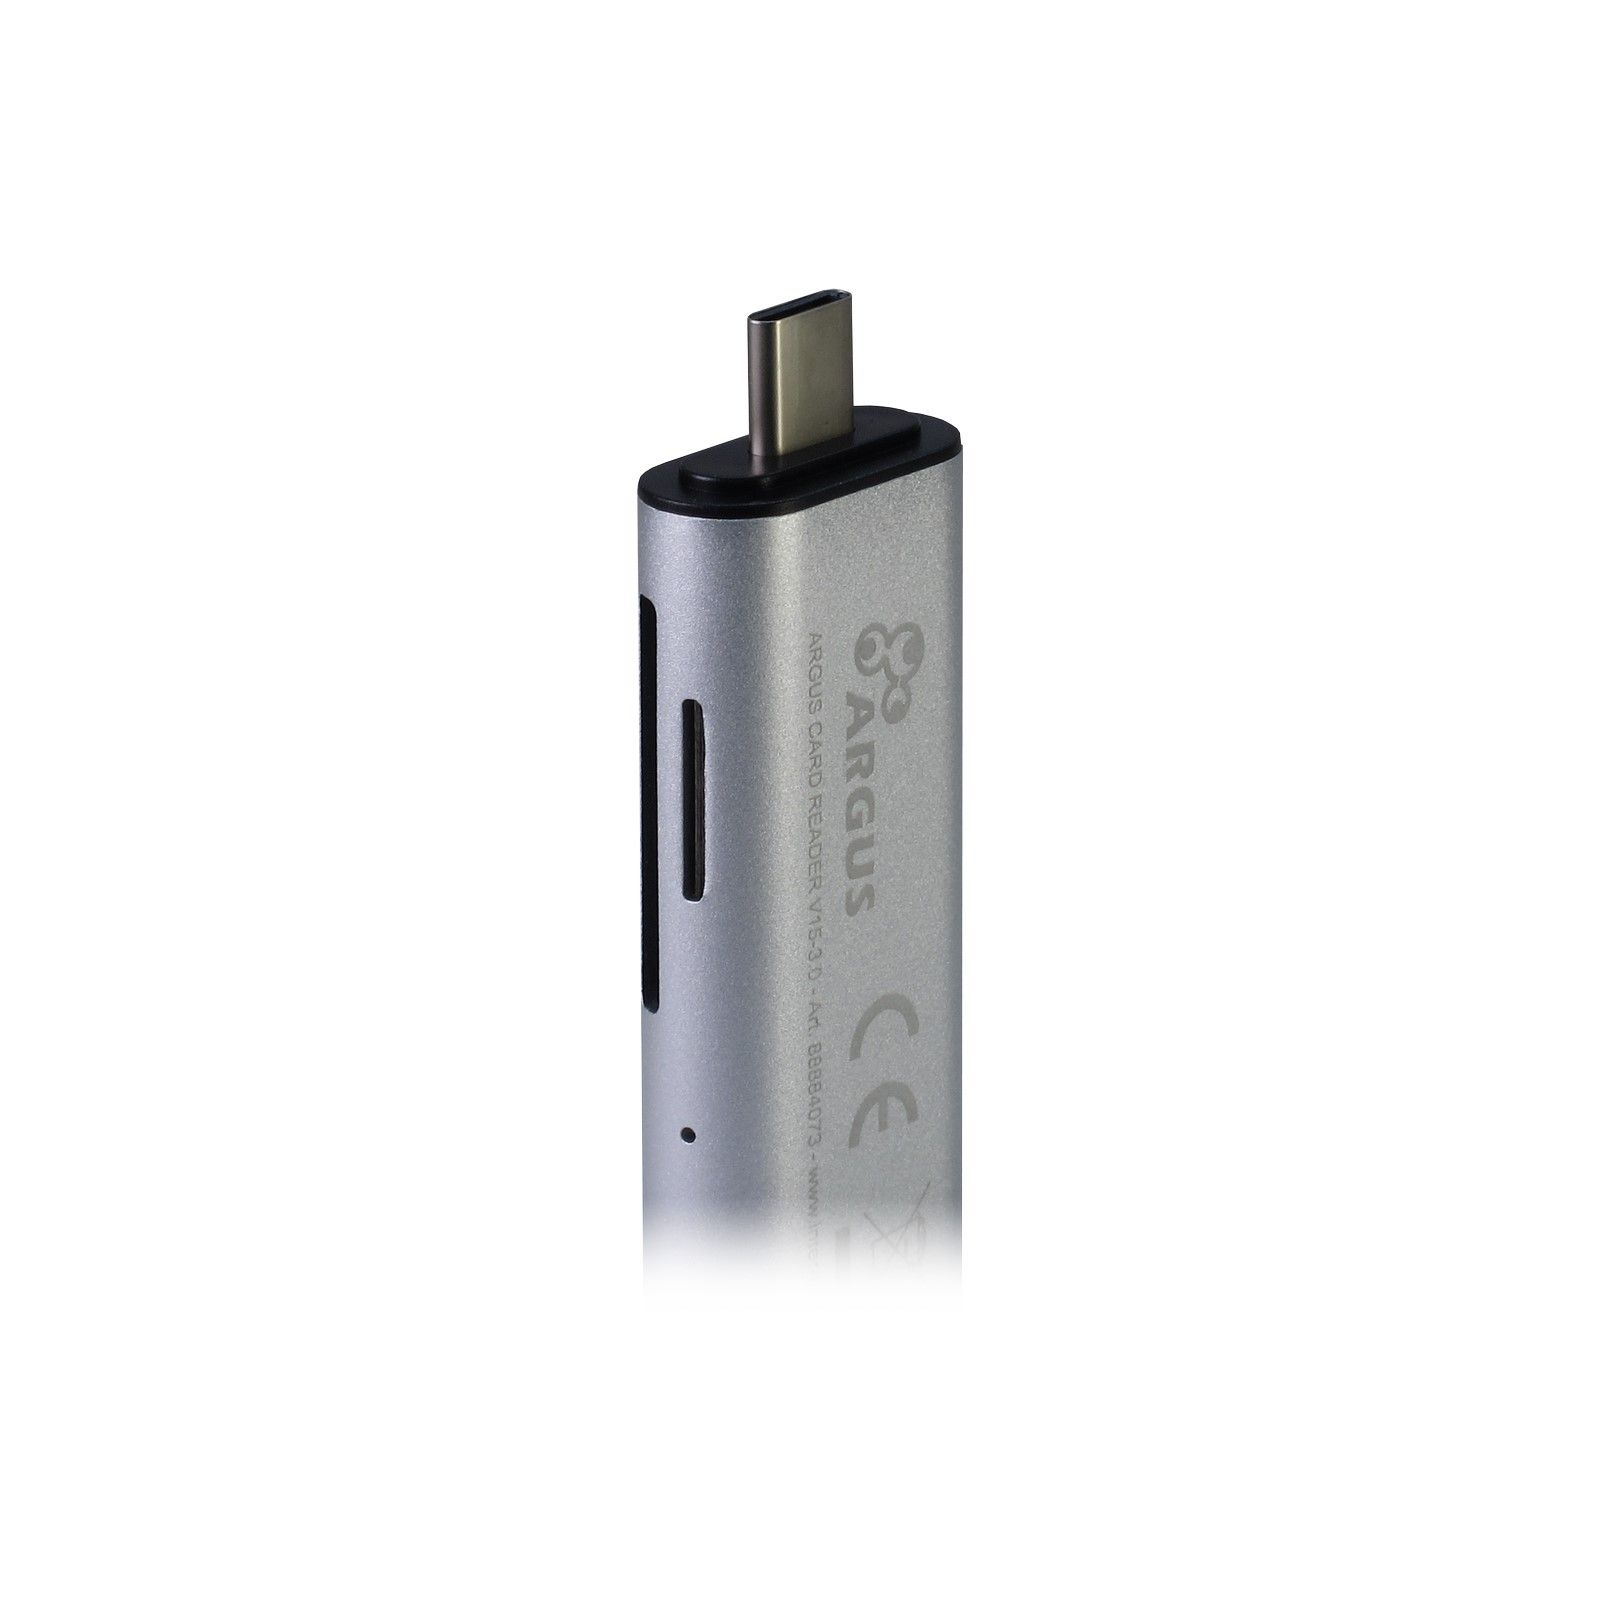 Зчитувач флеш-карт Argus USB2.0, USB Type C/ USB 3.0 Type A Male/ Micro USB 2.0 (OTG) (V15-3.0) зображення 2